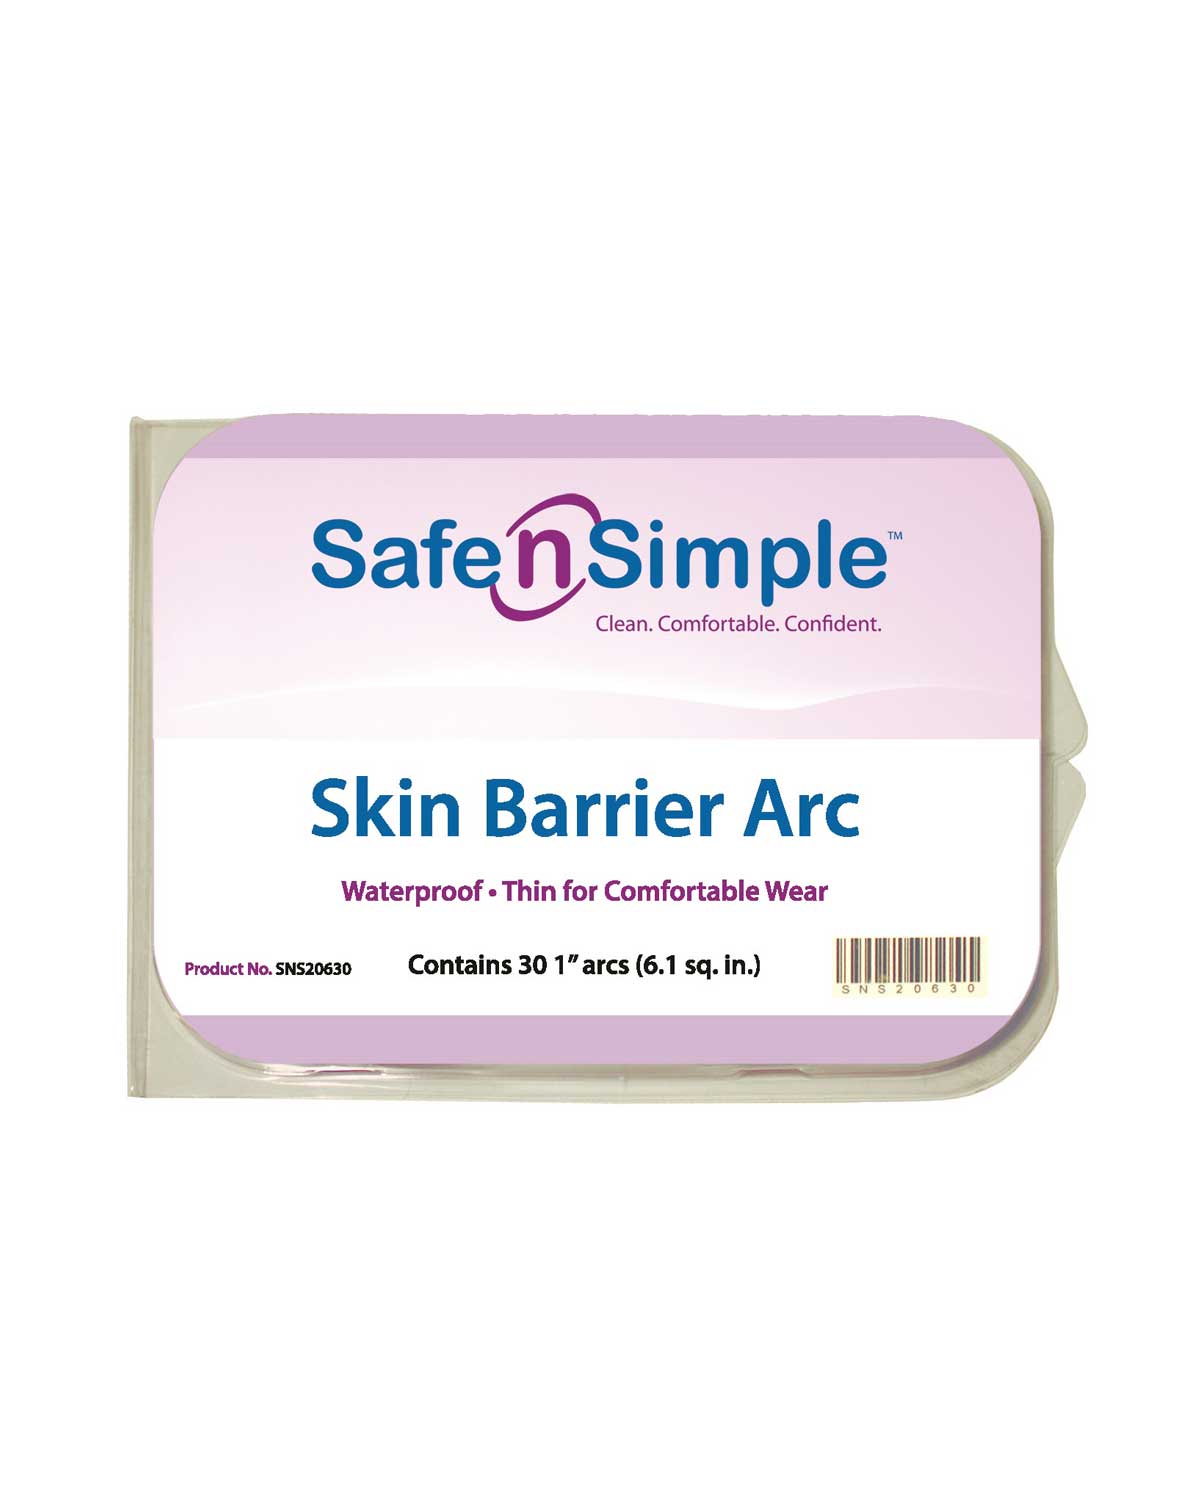 Safe n Simple Skin Barrier Arc  - 30 per package, 2" WIDE (WIDE)